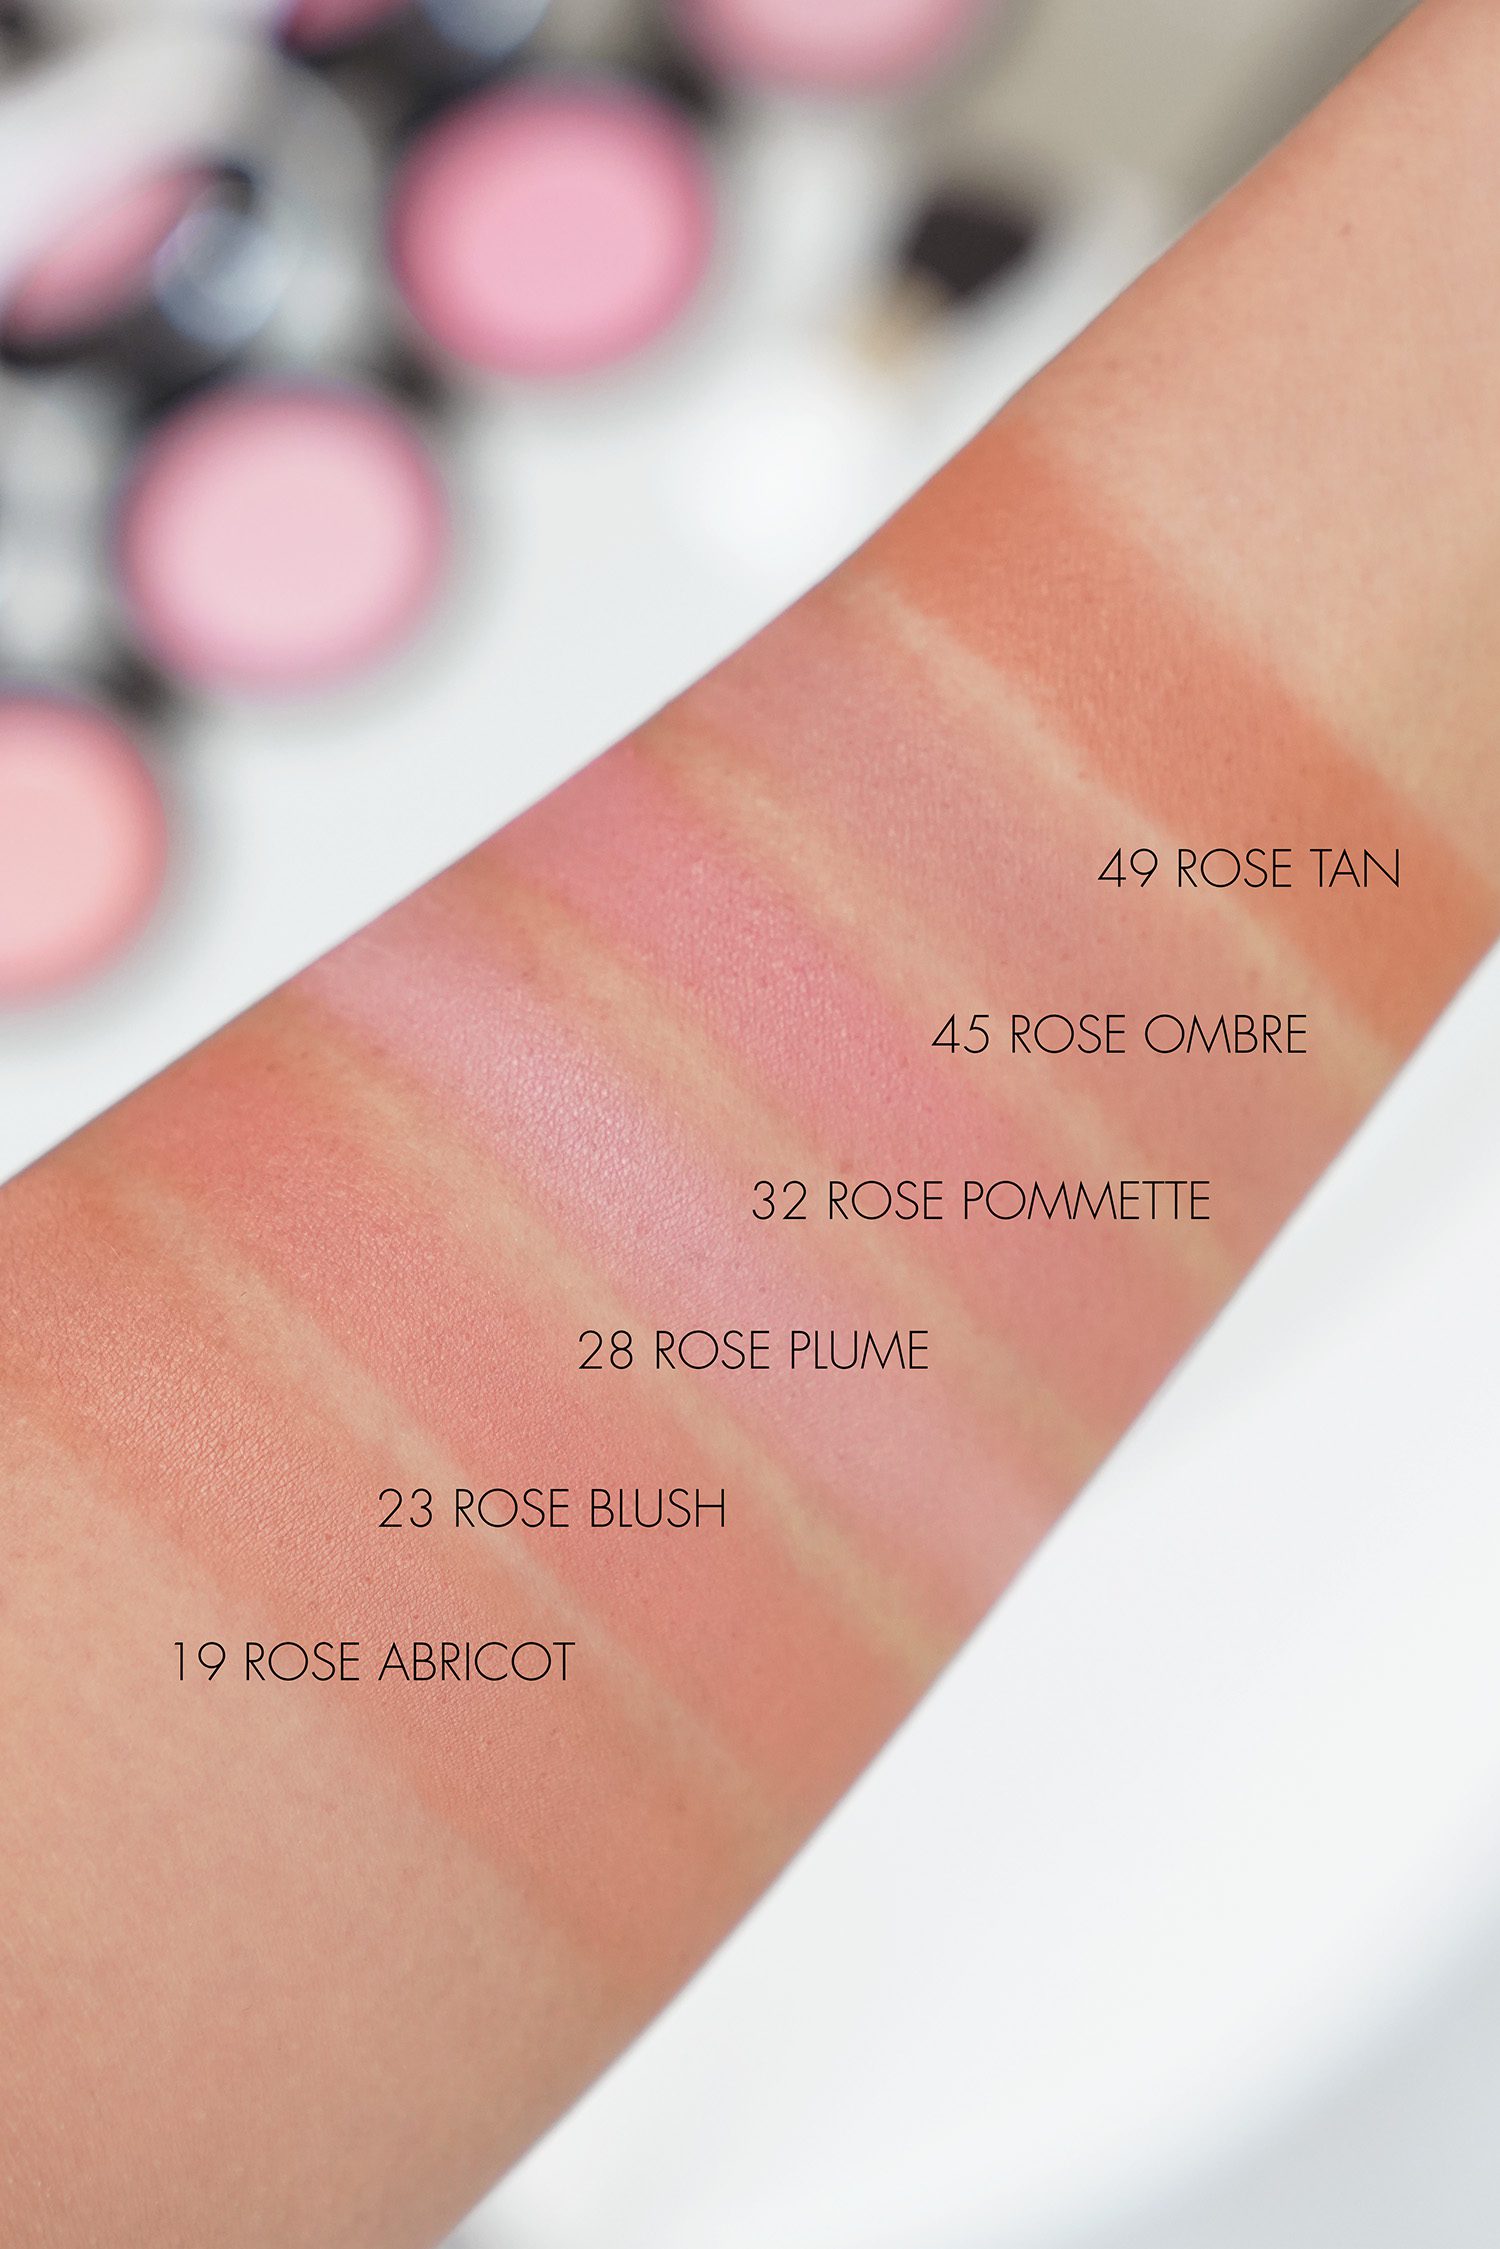 Rose Hermes Silky Blush Powder + Rosy Lip Enhancer Review - The